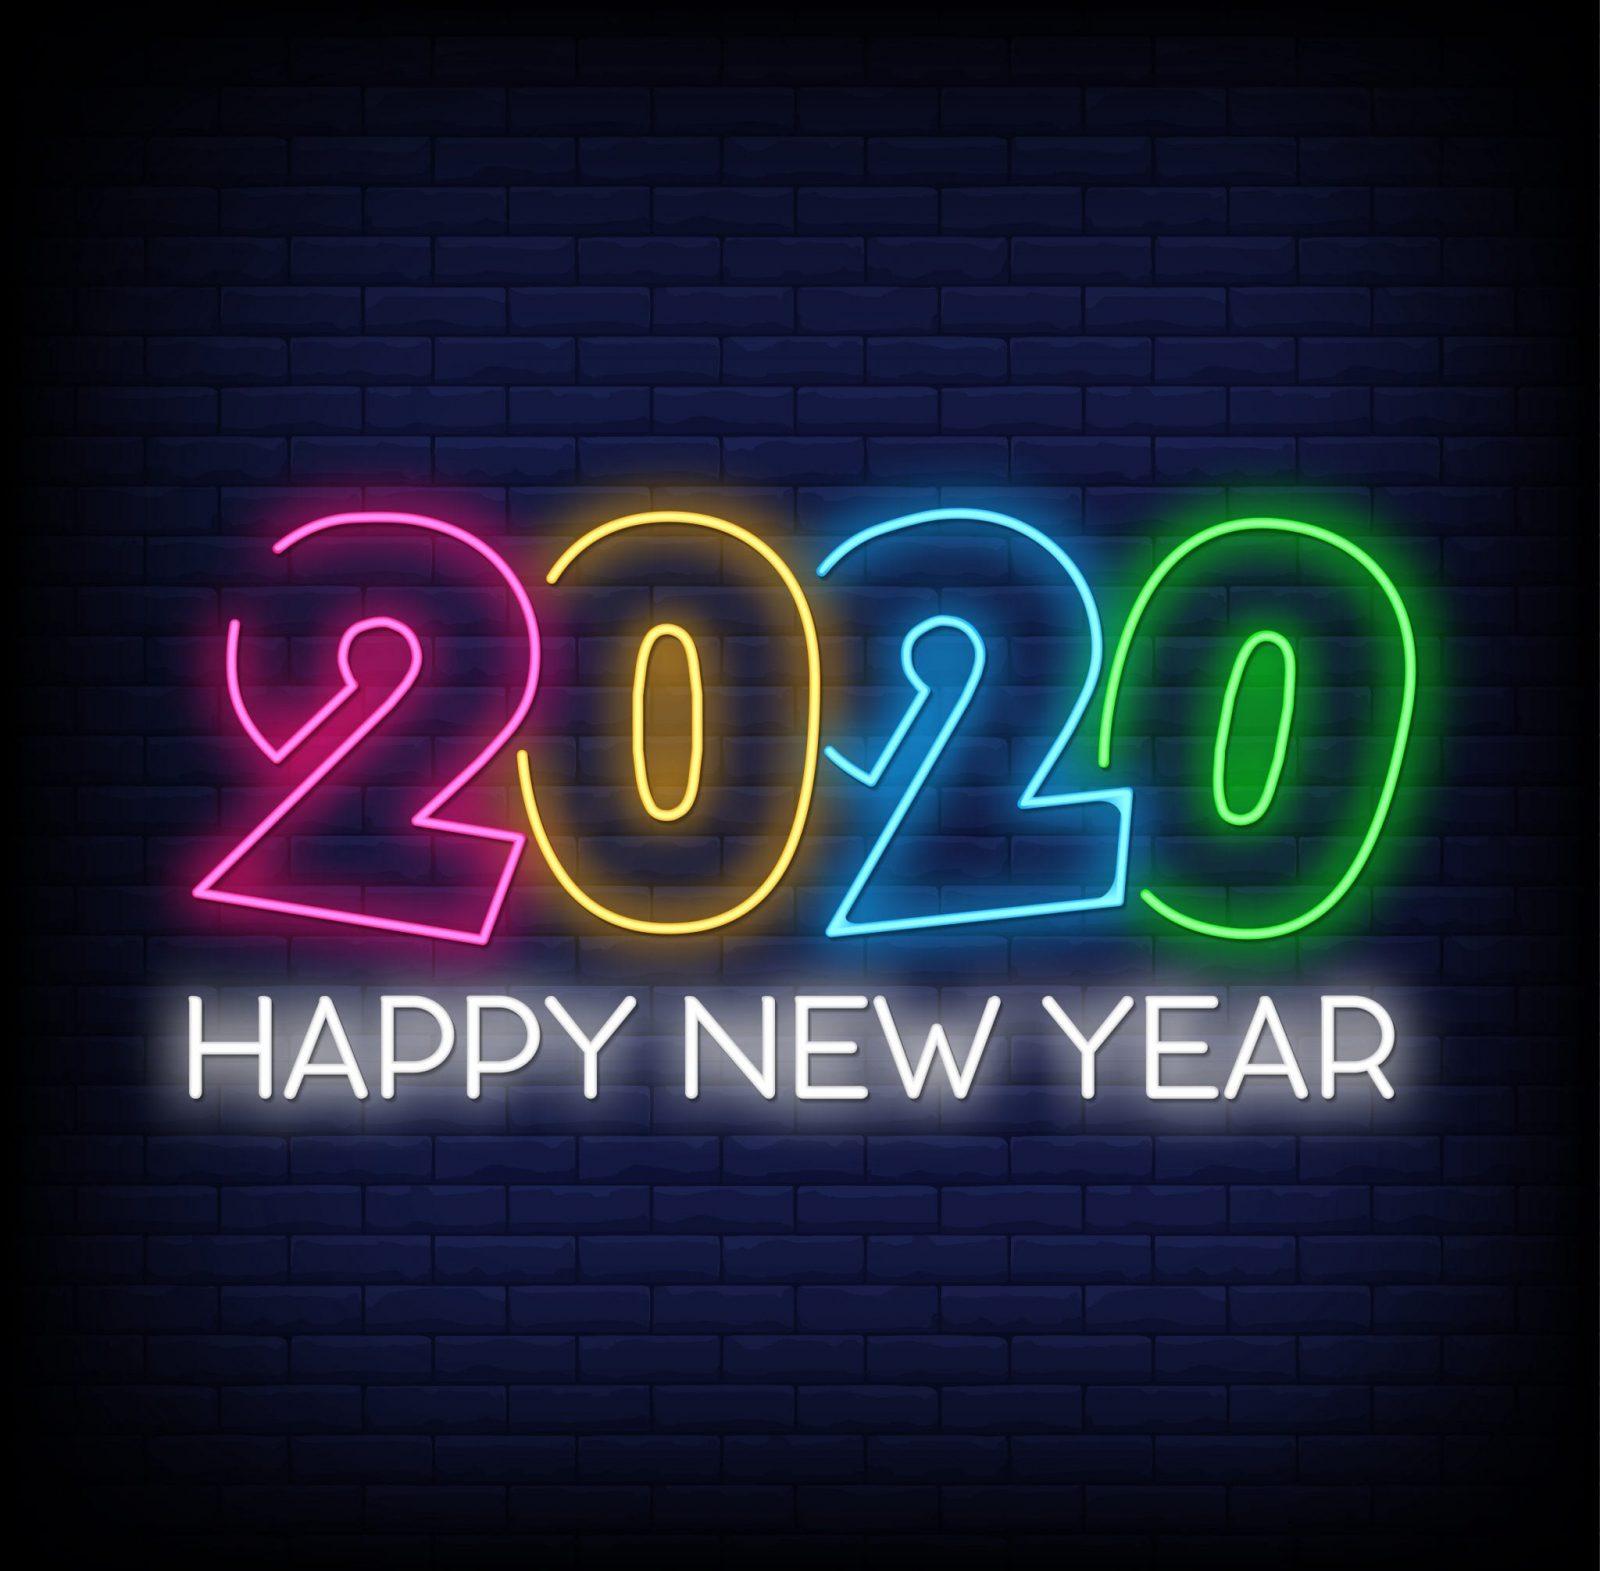 HD Happy New Year 2020 Image Wallpaper Photo [2020]